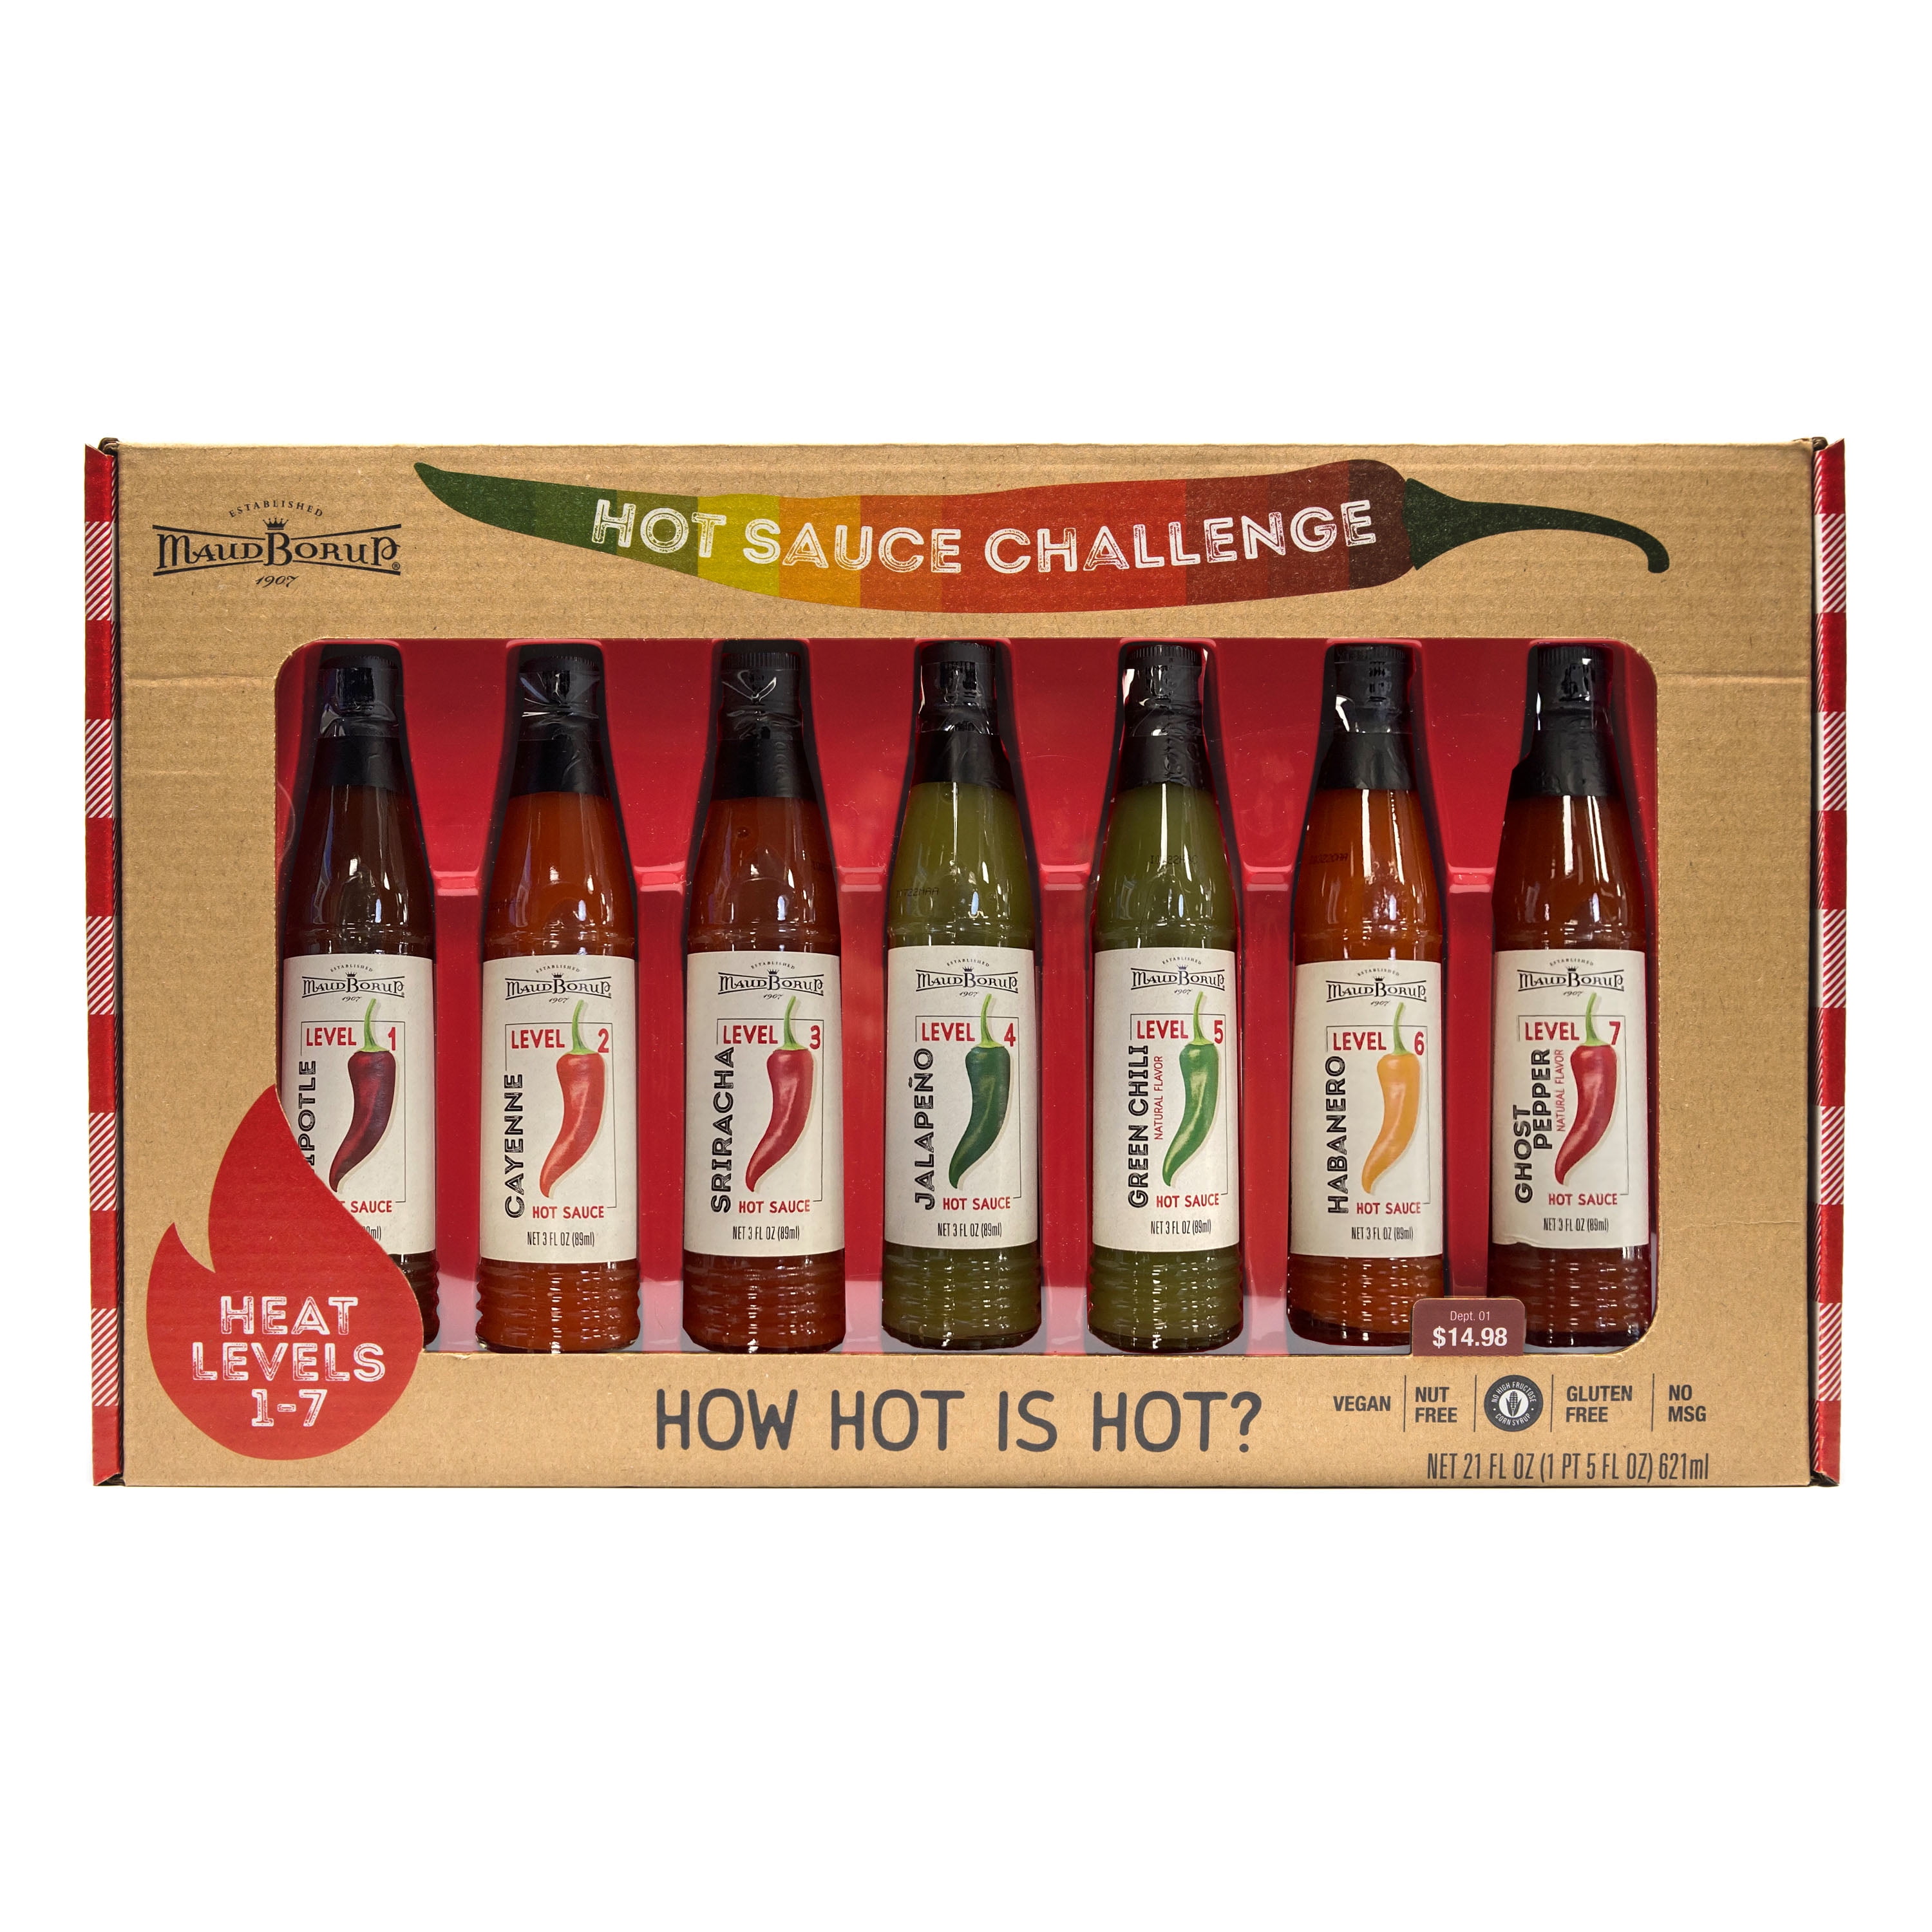 Maud Borup Hot Sauce Challenge Gift Set, 7-Pack